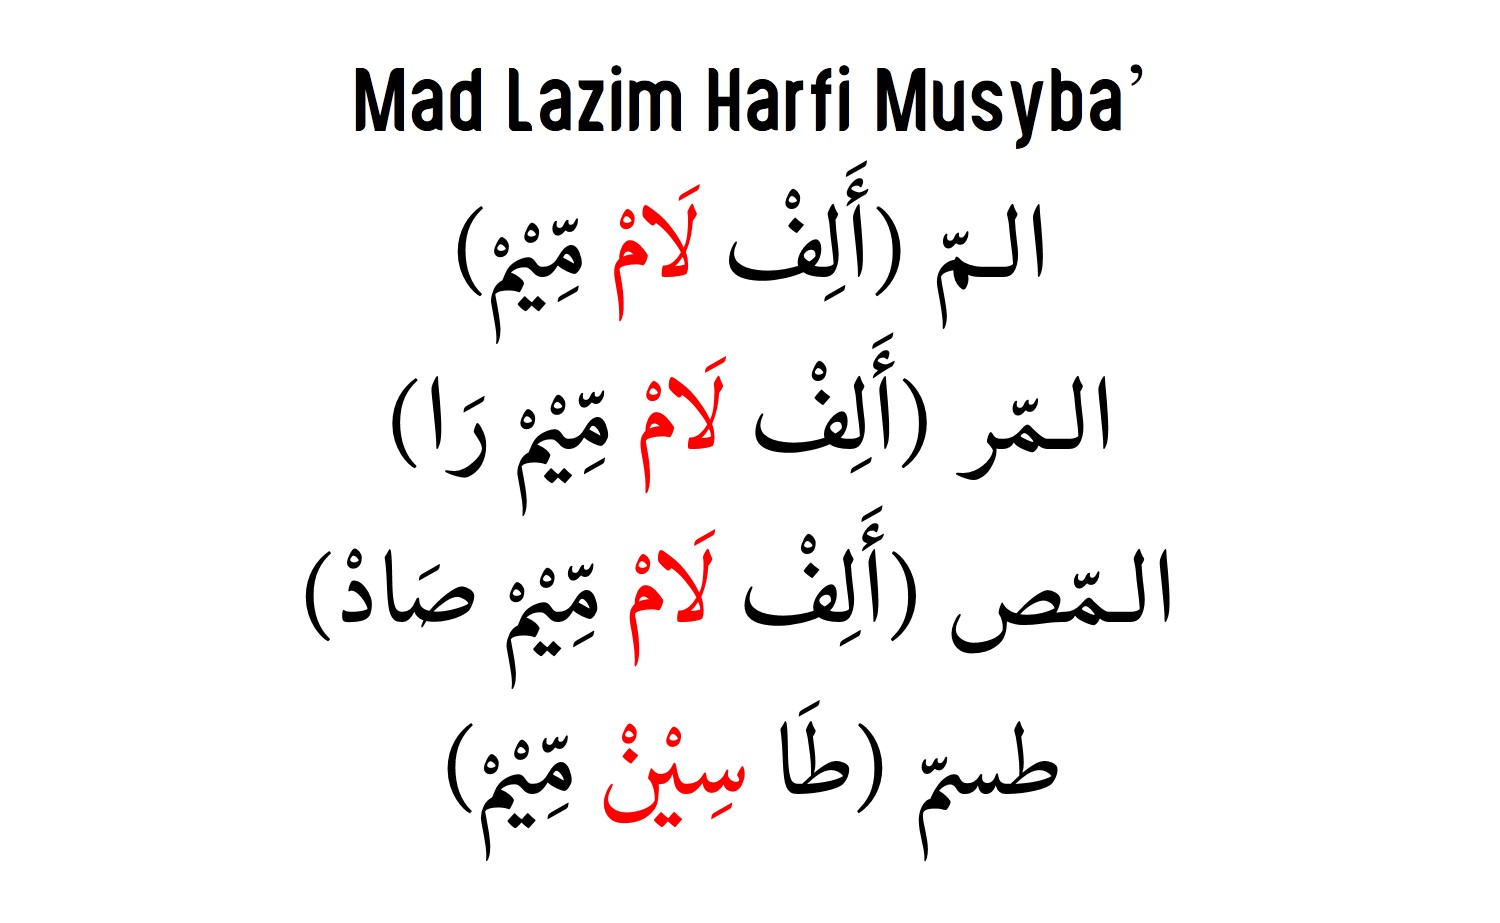 Contoh Bacaan Mad Lazim Harfi Musyba - KibrisPDR